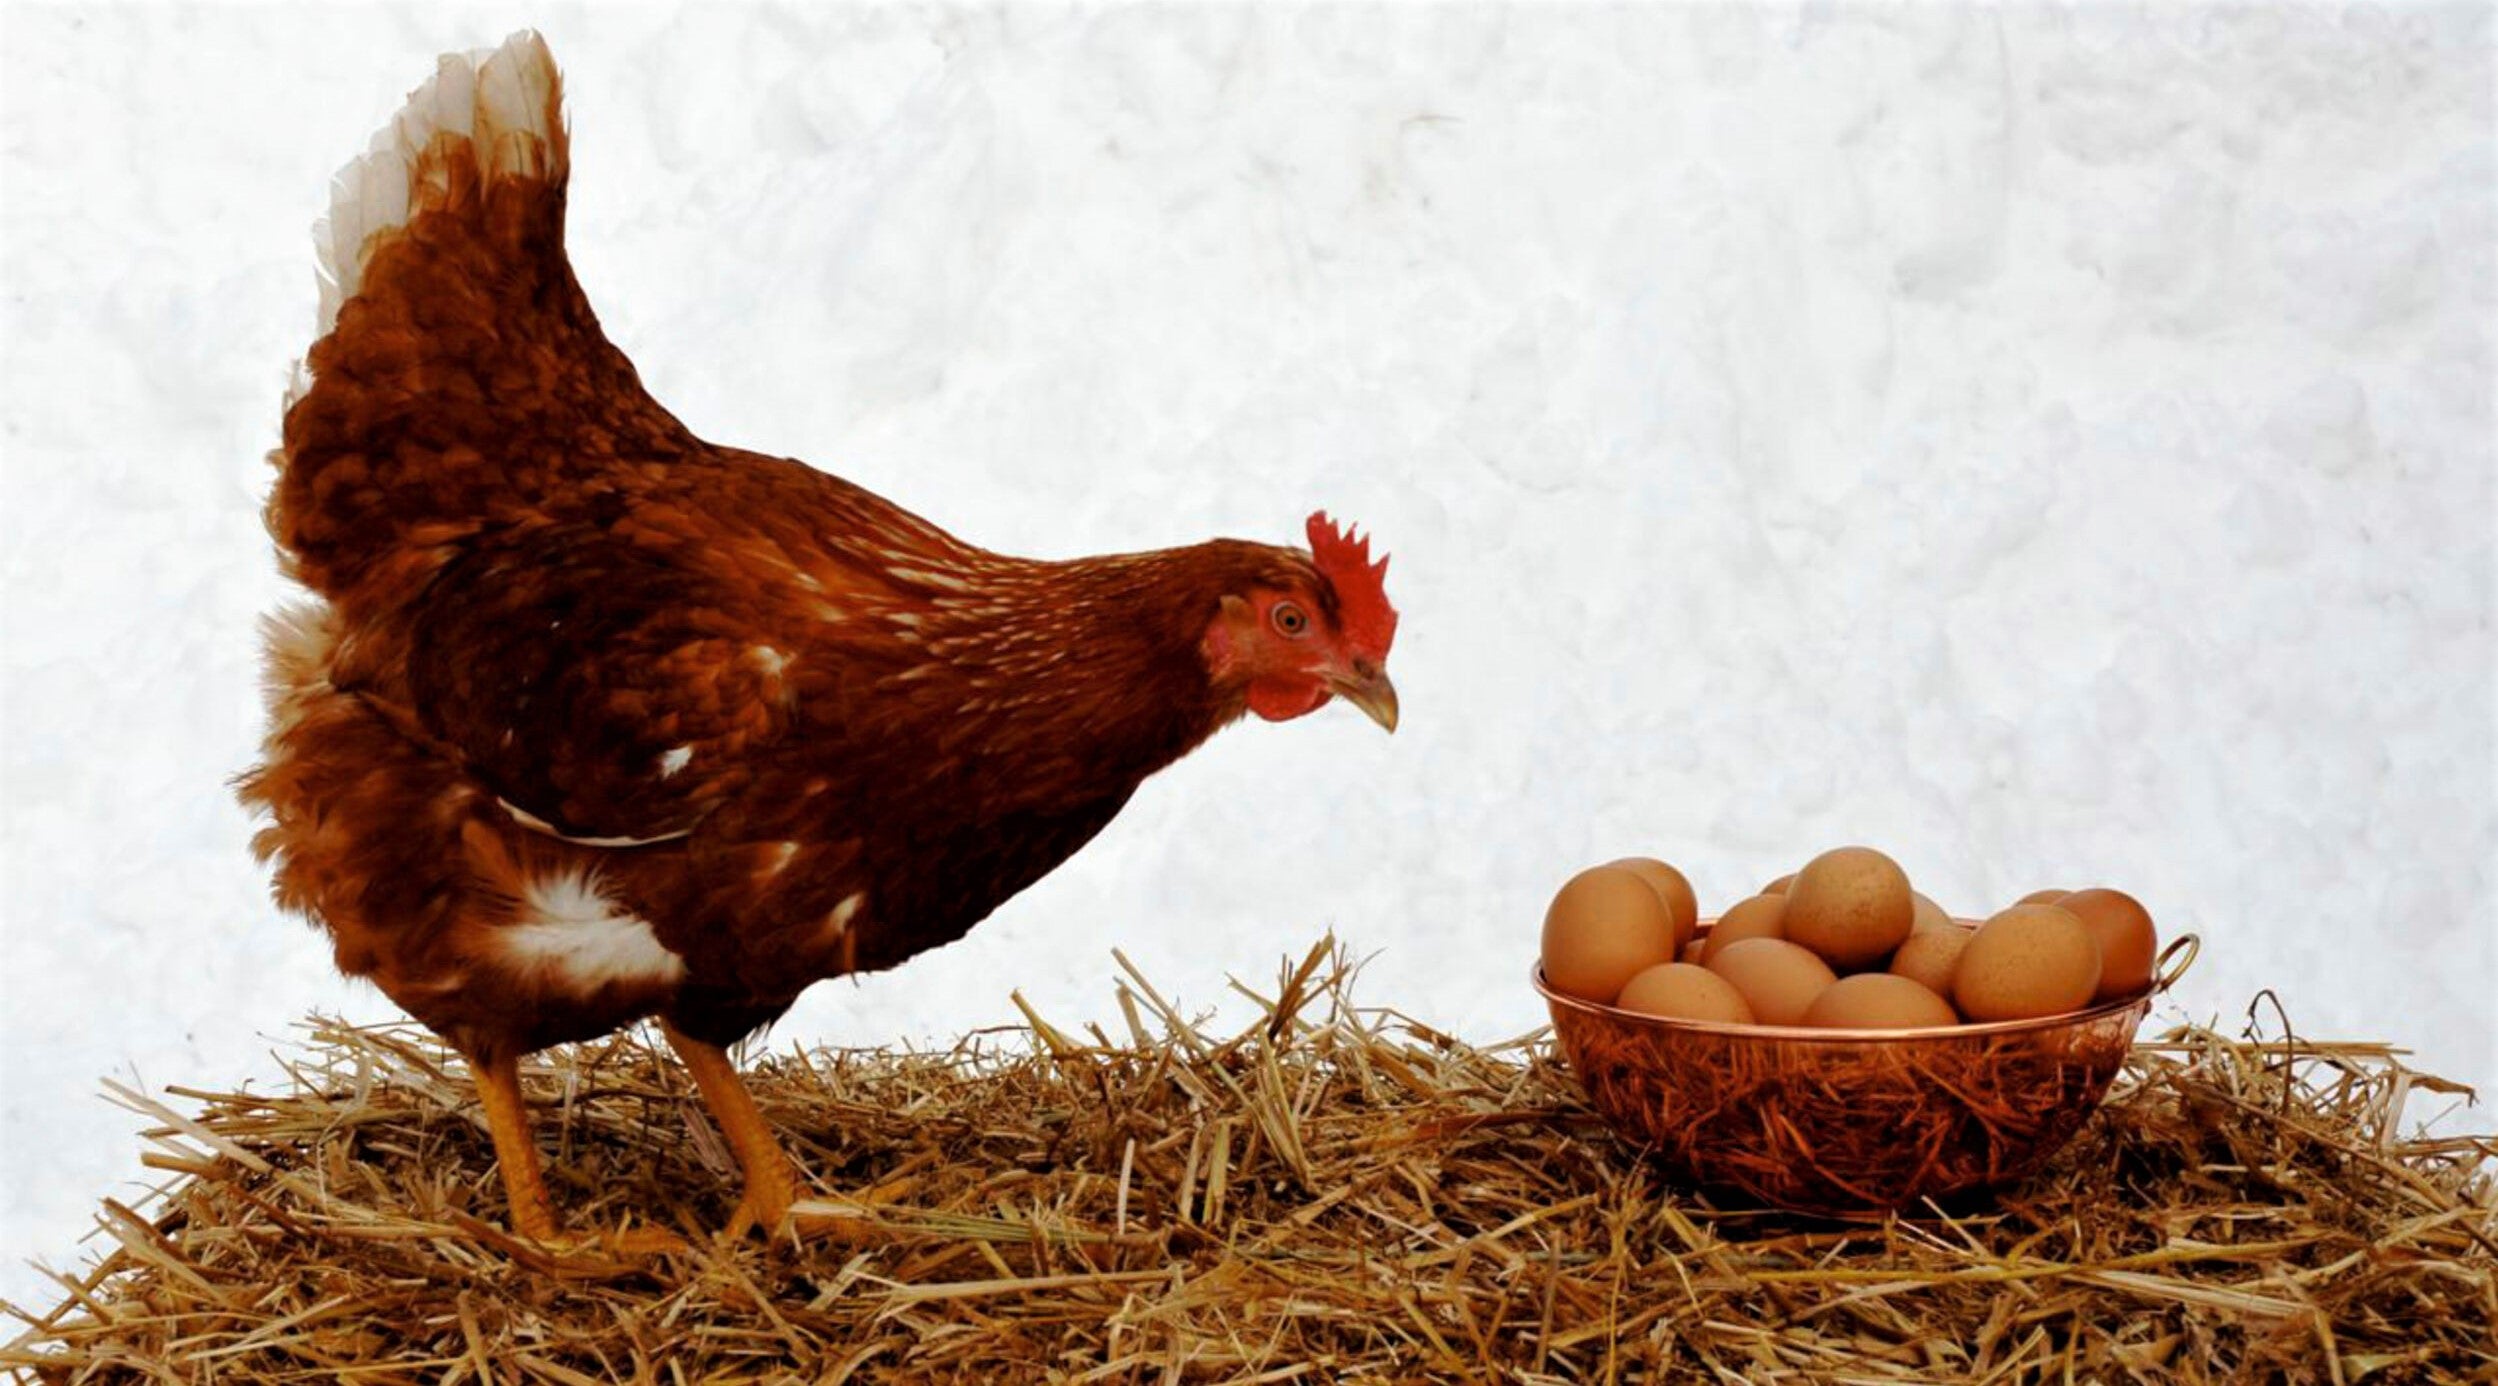 free-range hen inspecting basket of pasture-raised eggs